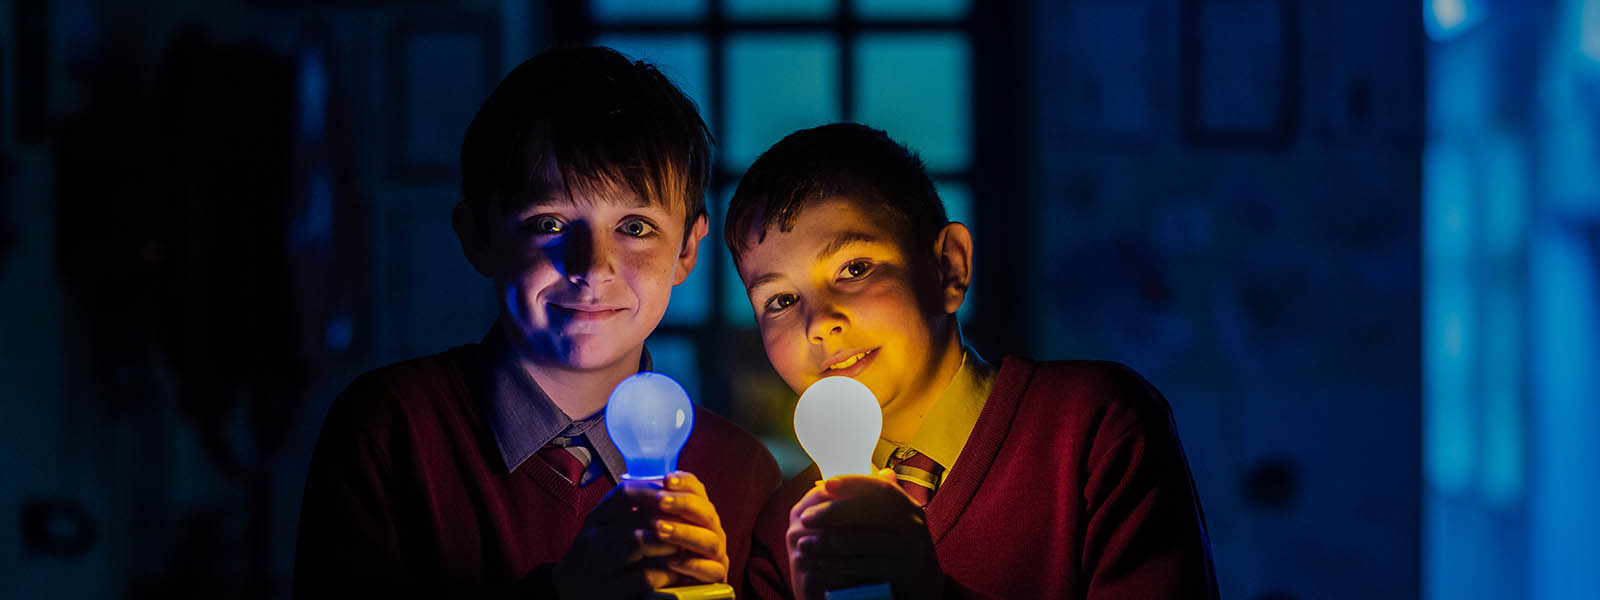 Two boys with lightbulbs.